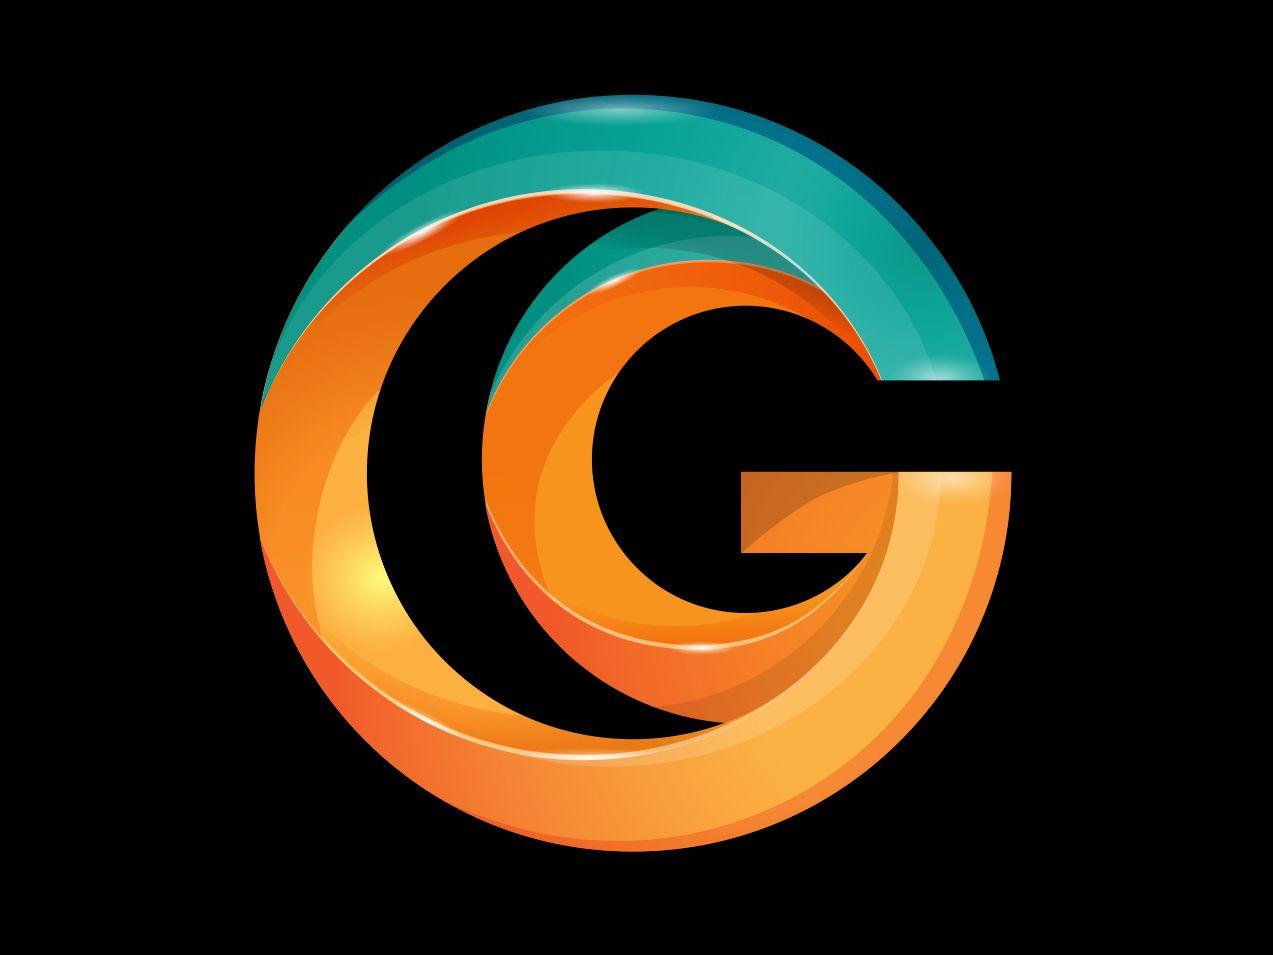 CG Logo - CG Logo Study by John Cassella | Dribbble | Dribbble